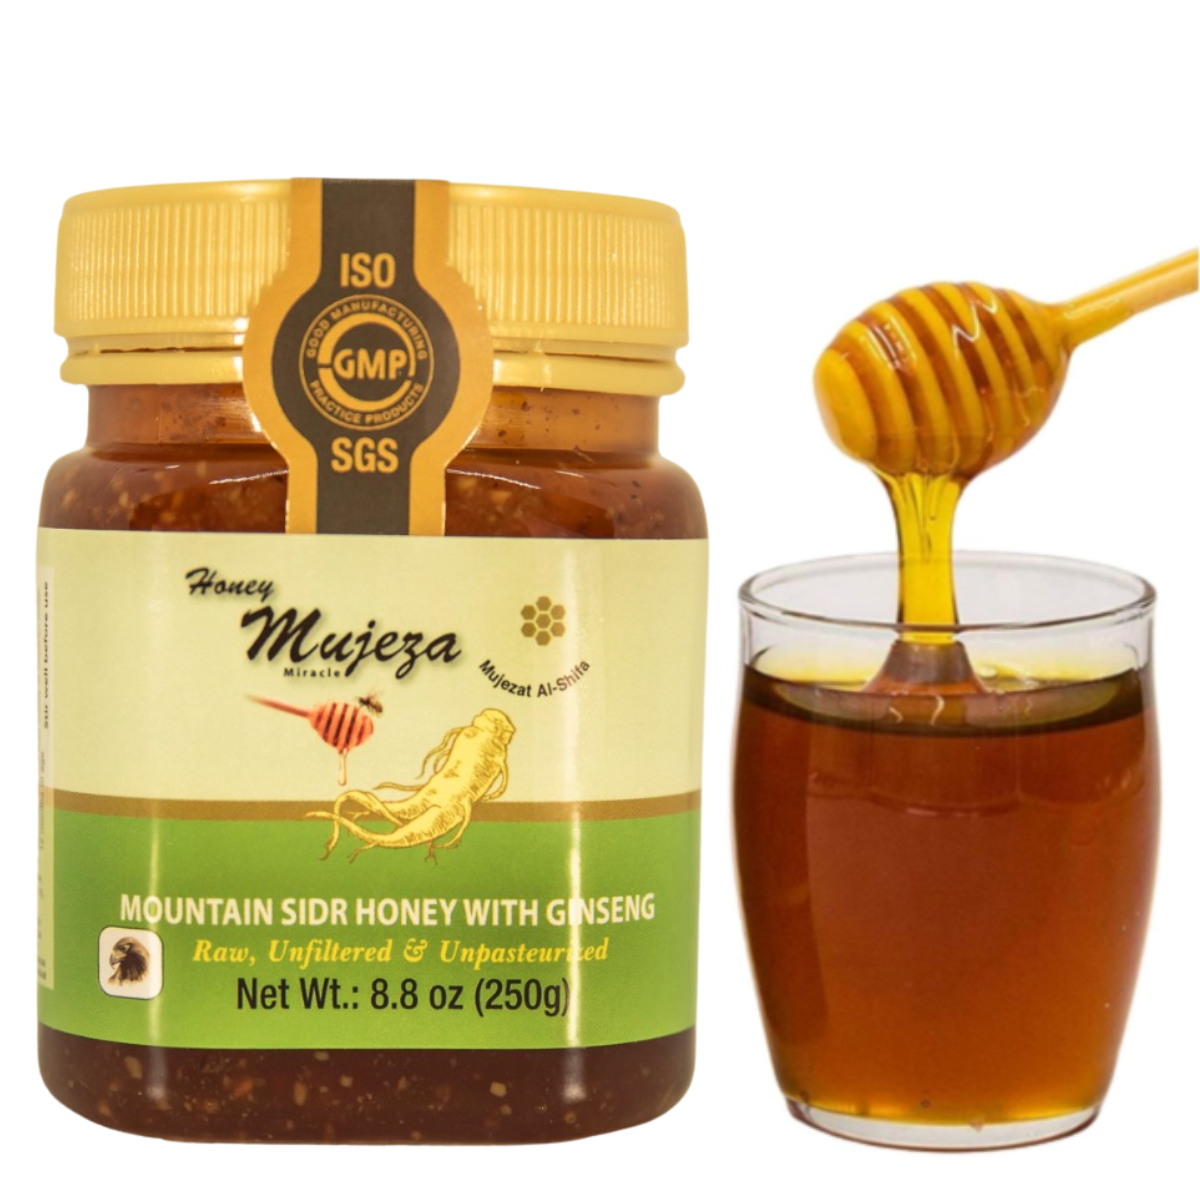 Mountain Sidr Honey with Ginseng -  عسل السدر الجبلي مع الجينسنغ